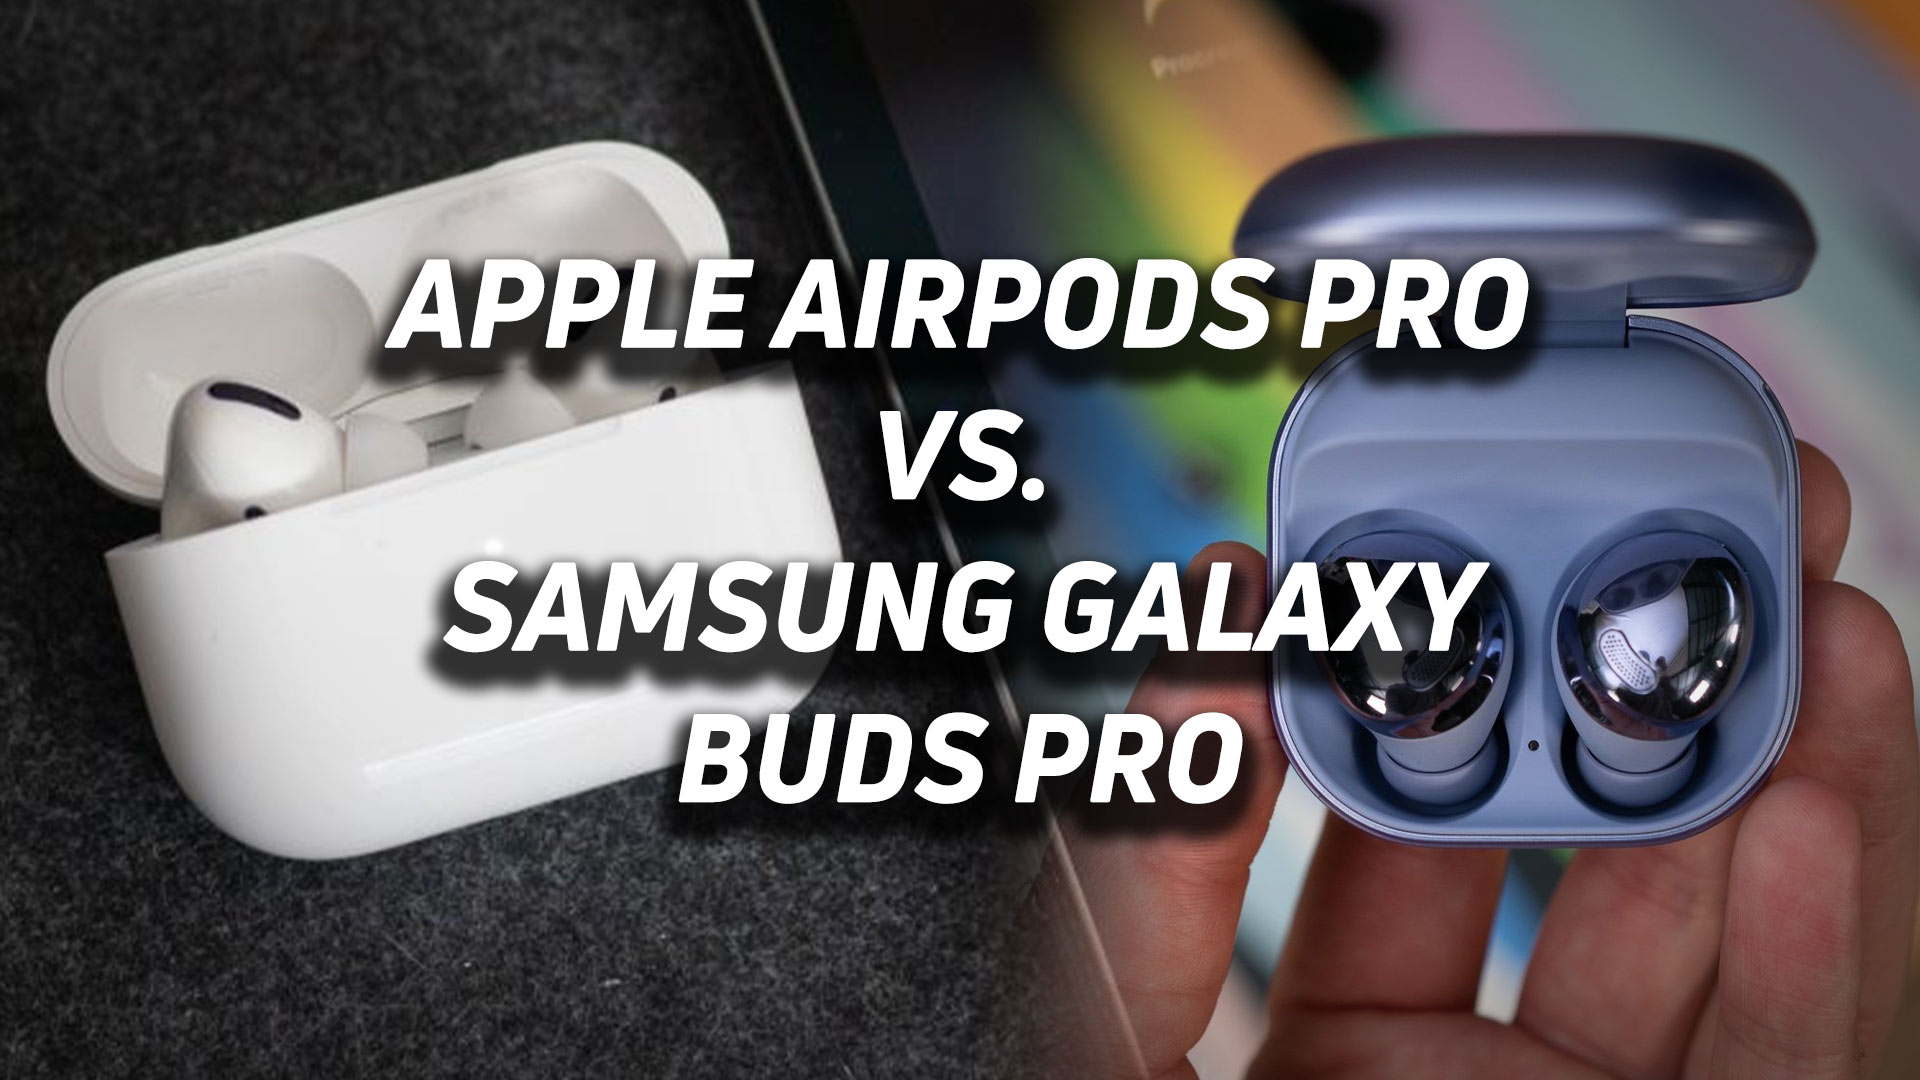 https://www.soundguys.com/wp-content/uploads/2021/02/Apple-AirPods-Pro-vs-Samsung-Galaxy-Buds-Pro-hero.jpg